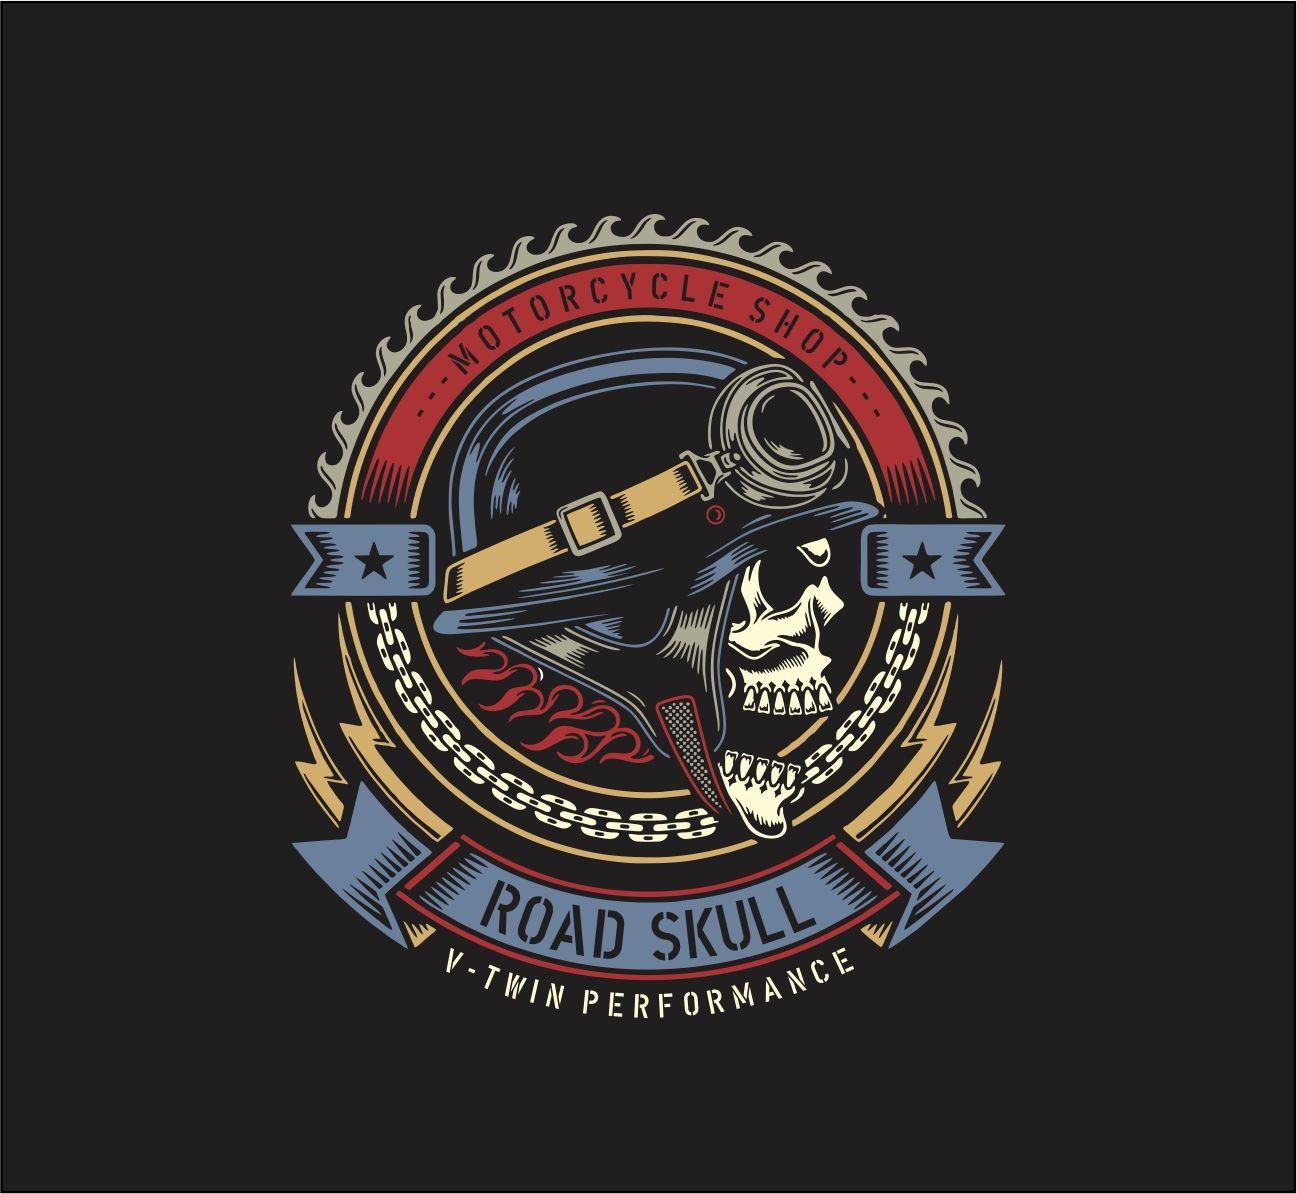 Performance Company Logo - Bold, Playful, It Company Logo Design for RoadSkulls V-Twin ...